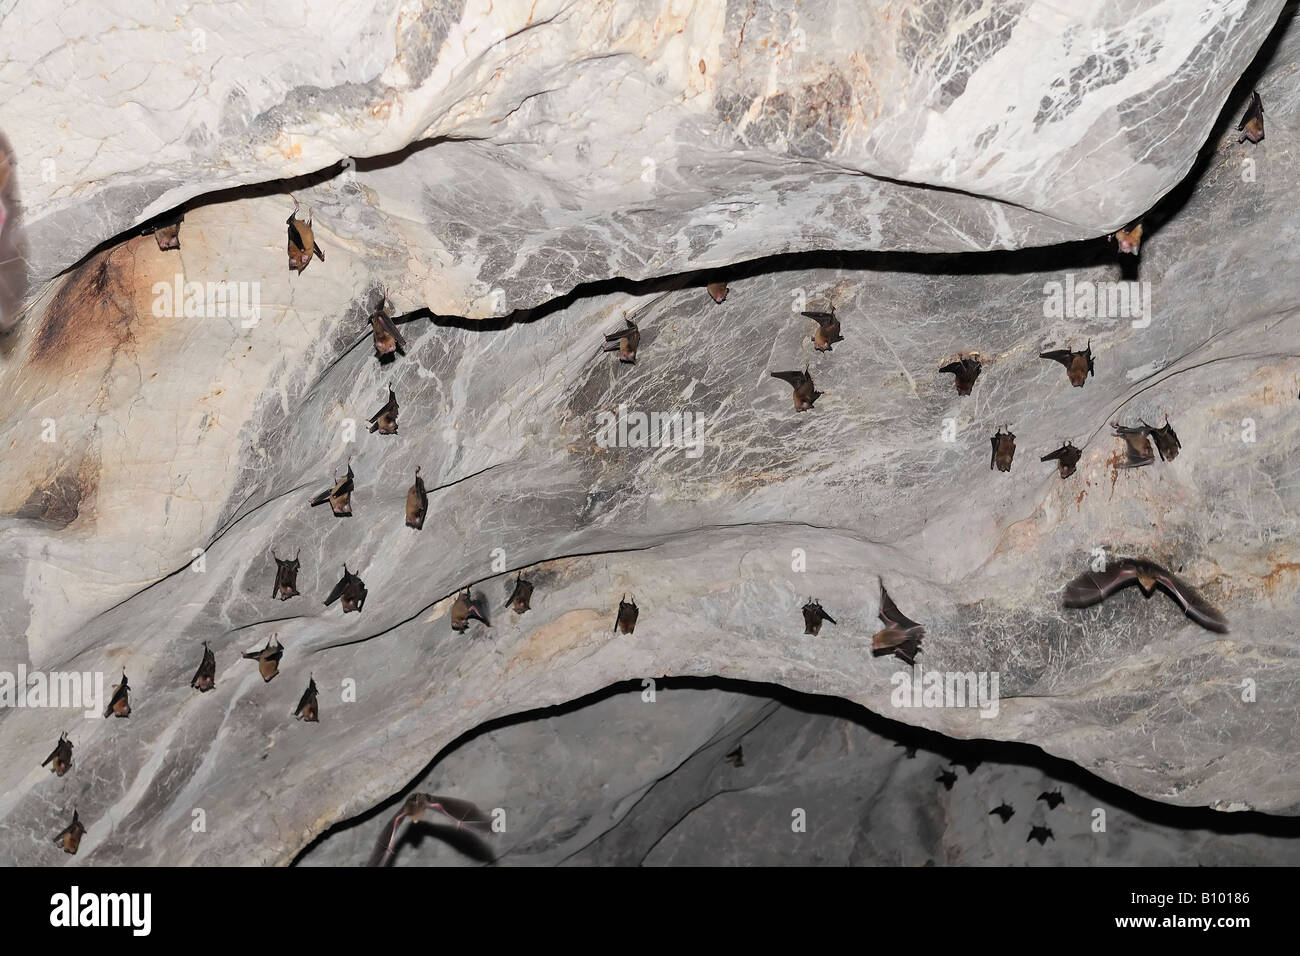 Bats flying in a cave, Kanchanaburi province, Thailand Stock Photo